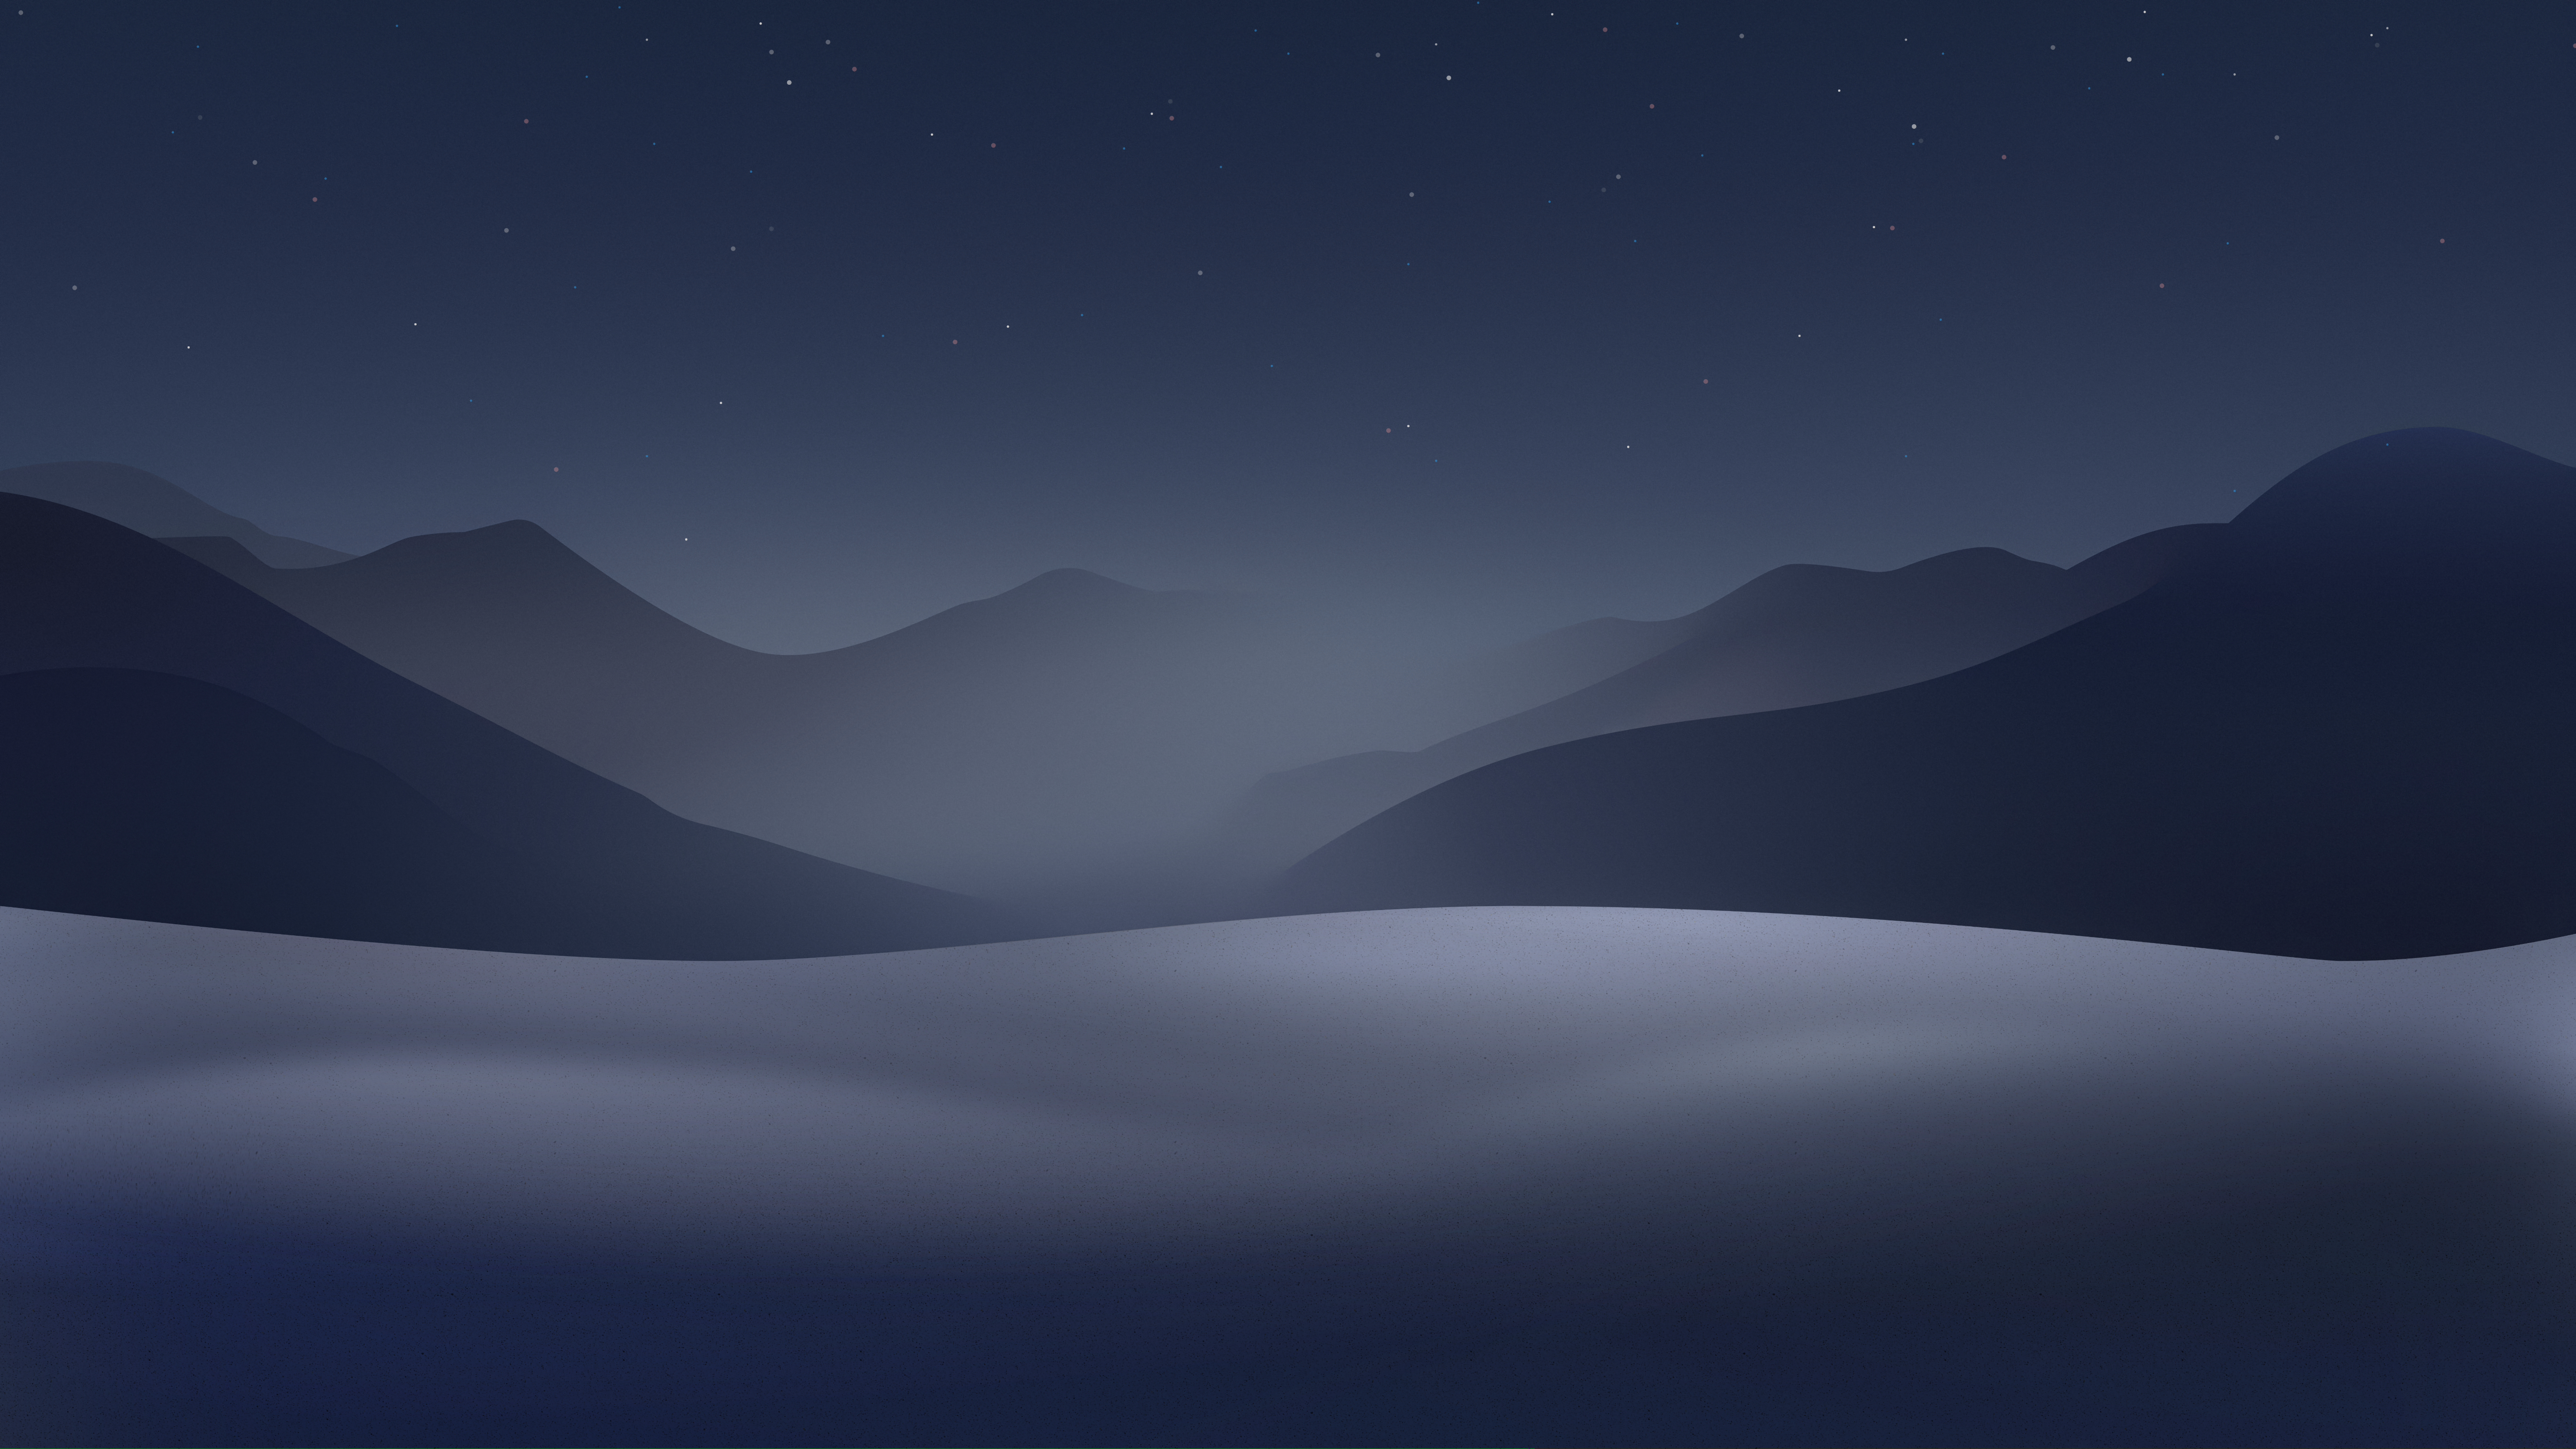 Basic Apple Guy Digital Art Artwork Illustration Landscape Night Nightscape Mountains Field Simple B 6016x3385